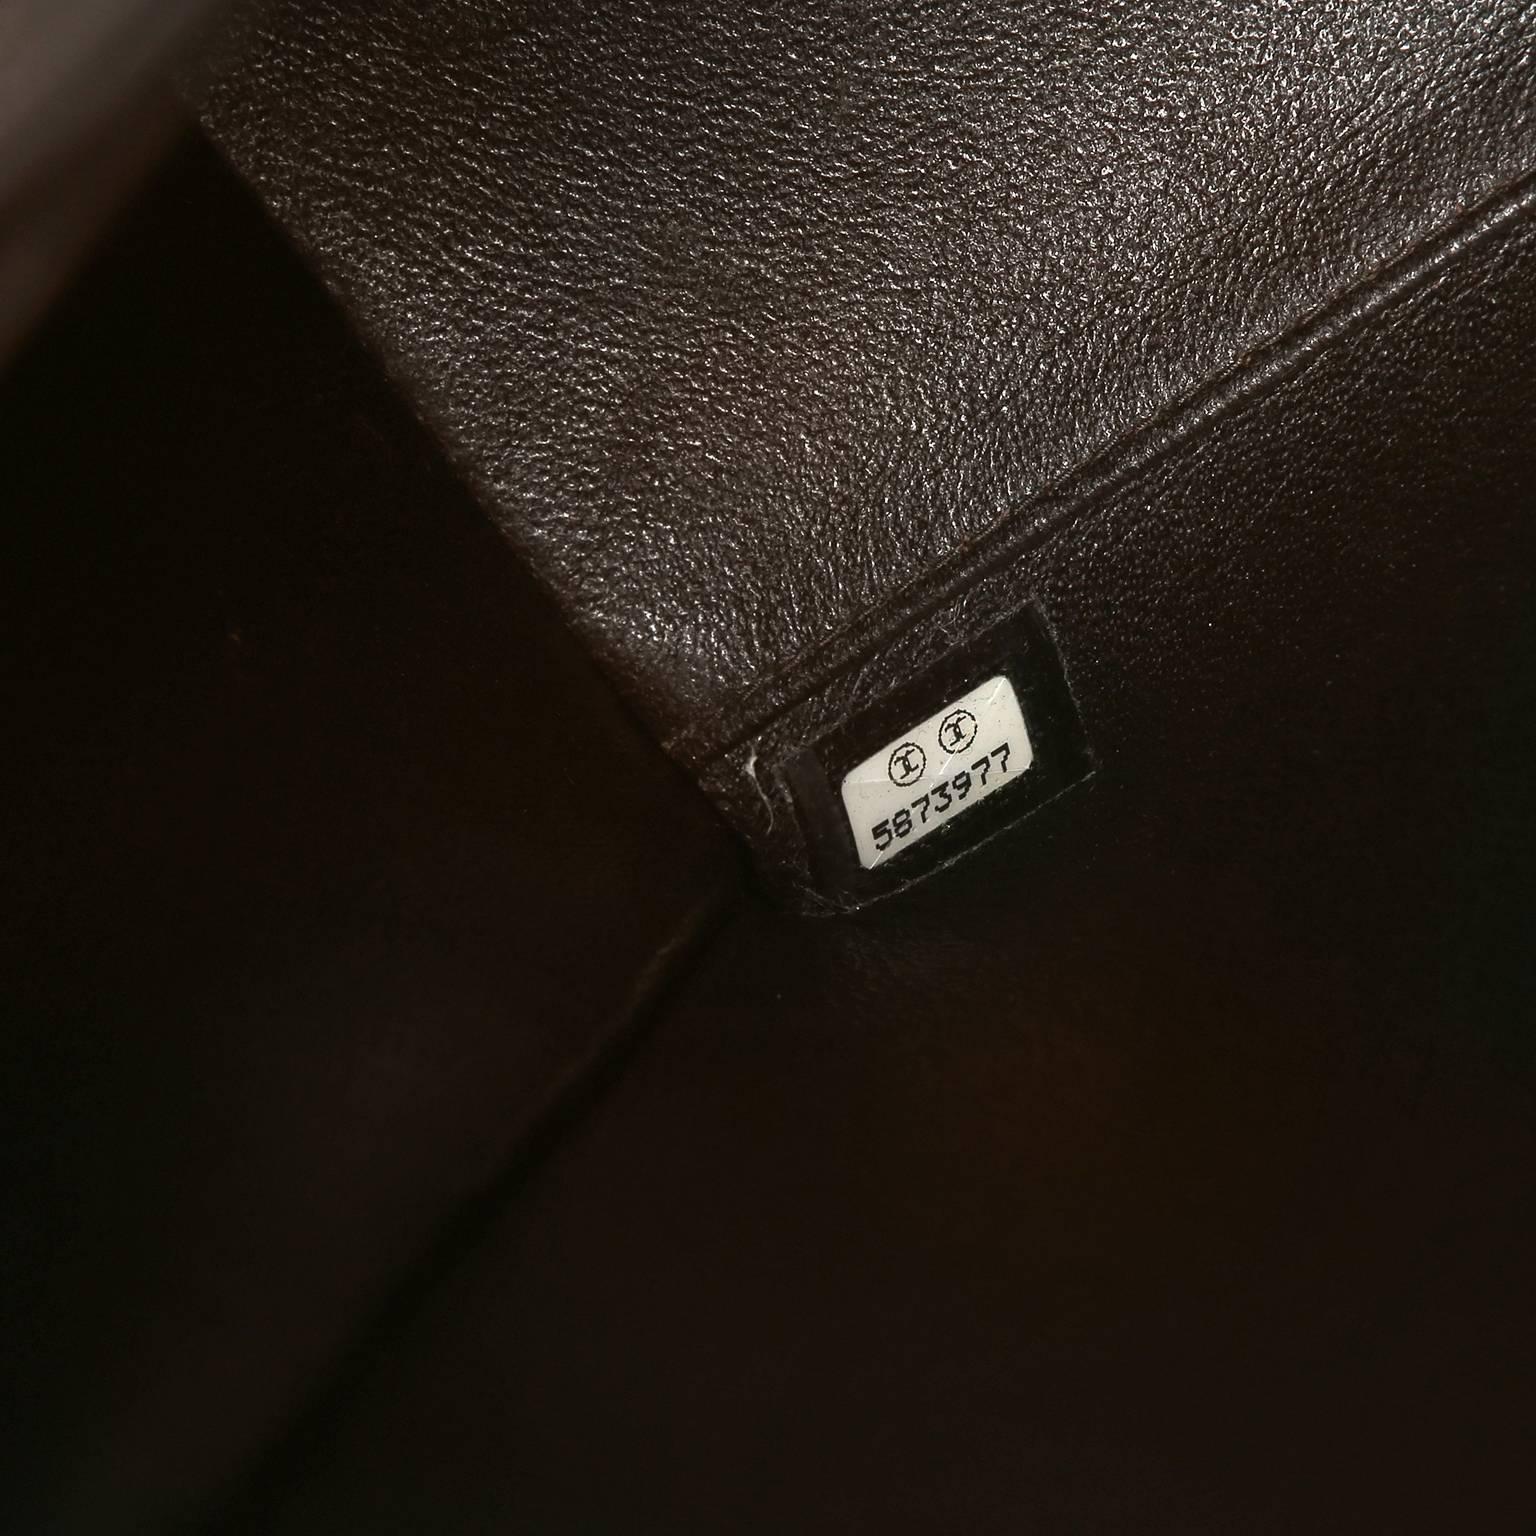 Chanel Brown Leather Flat Stitched Shoulder Bag For Sale 4